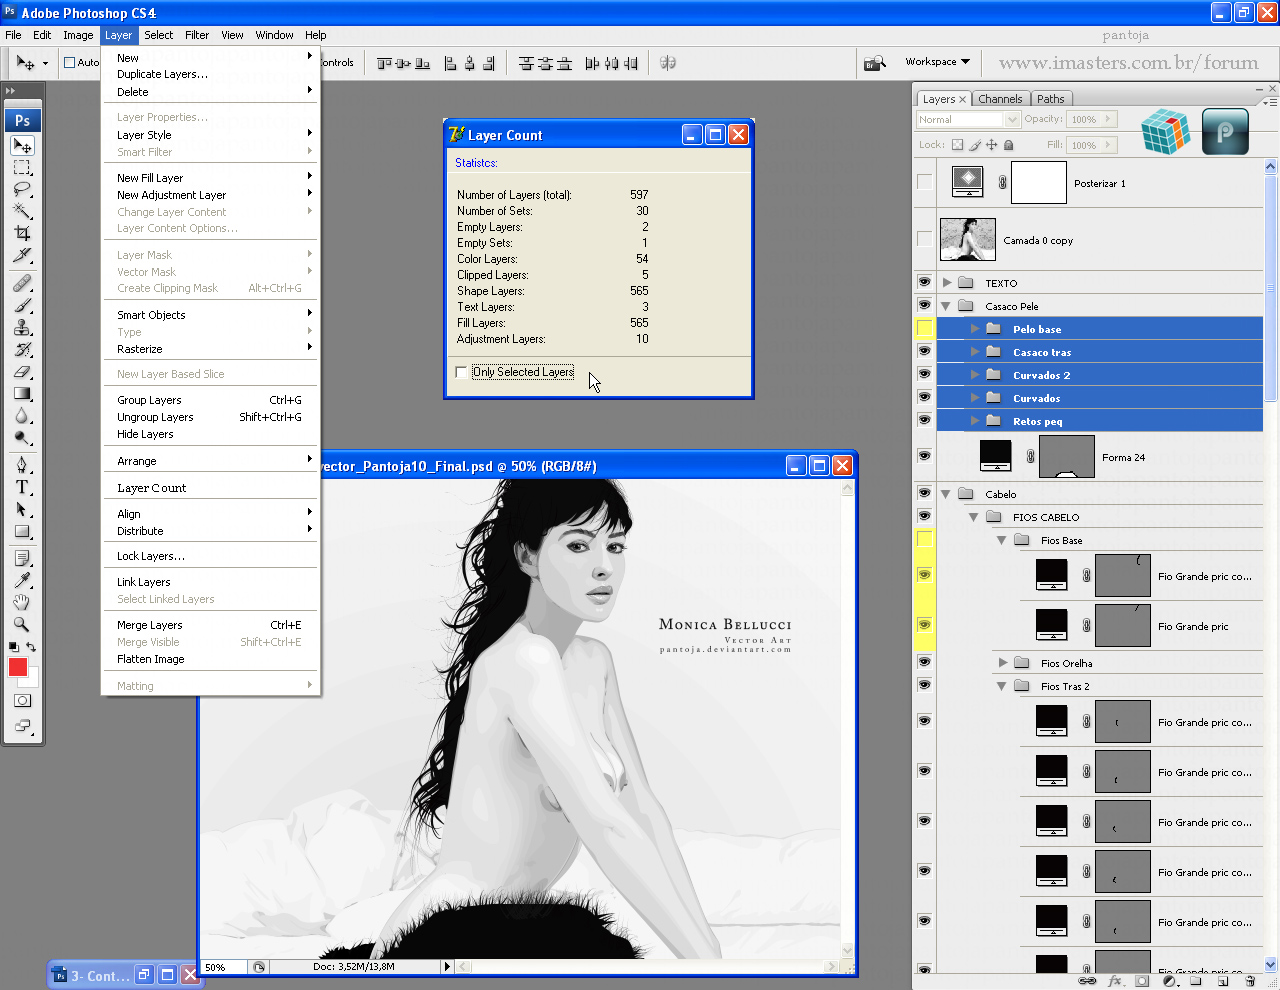 Adobe Photoshop Lightroom 6.12 CC for Mac Crack utorrent